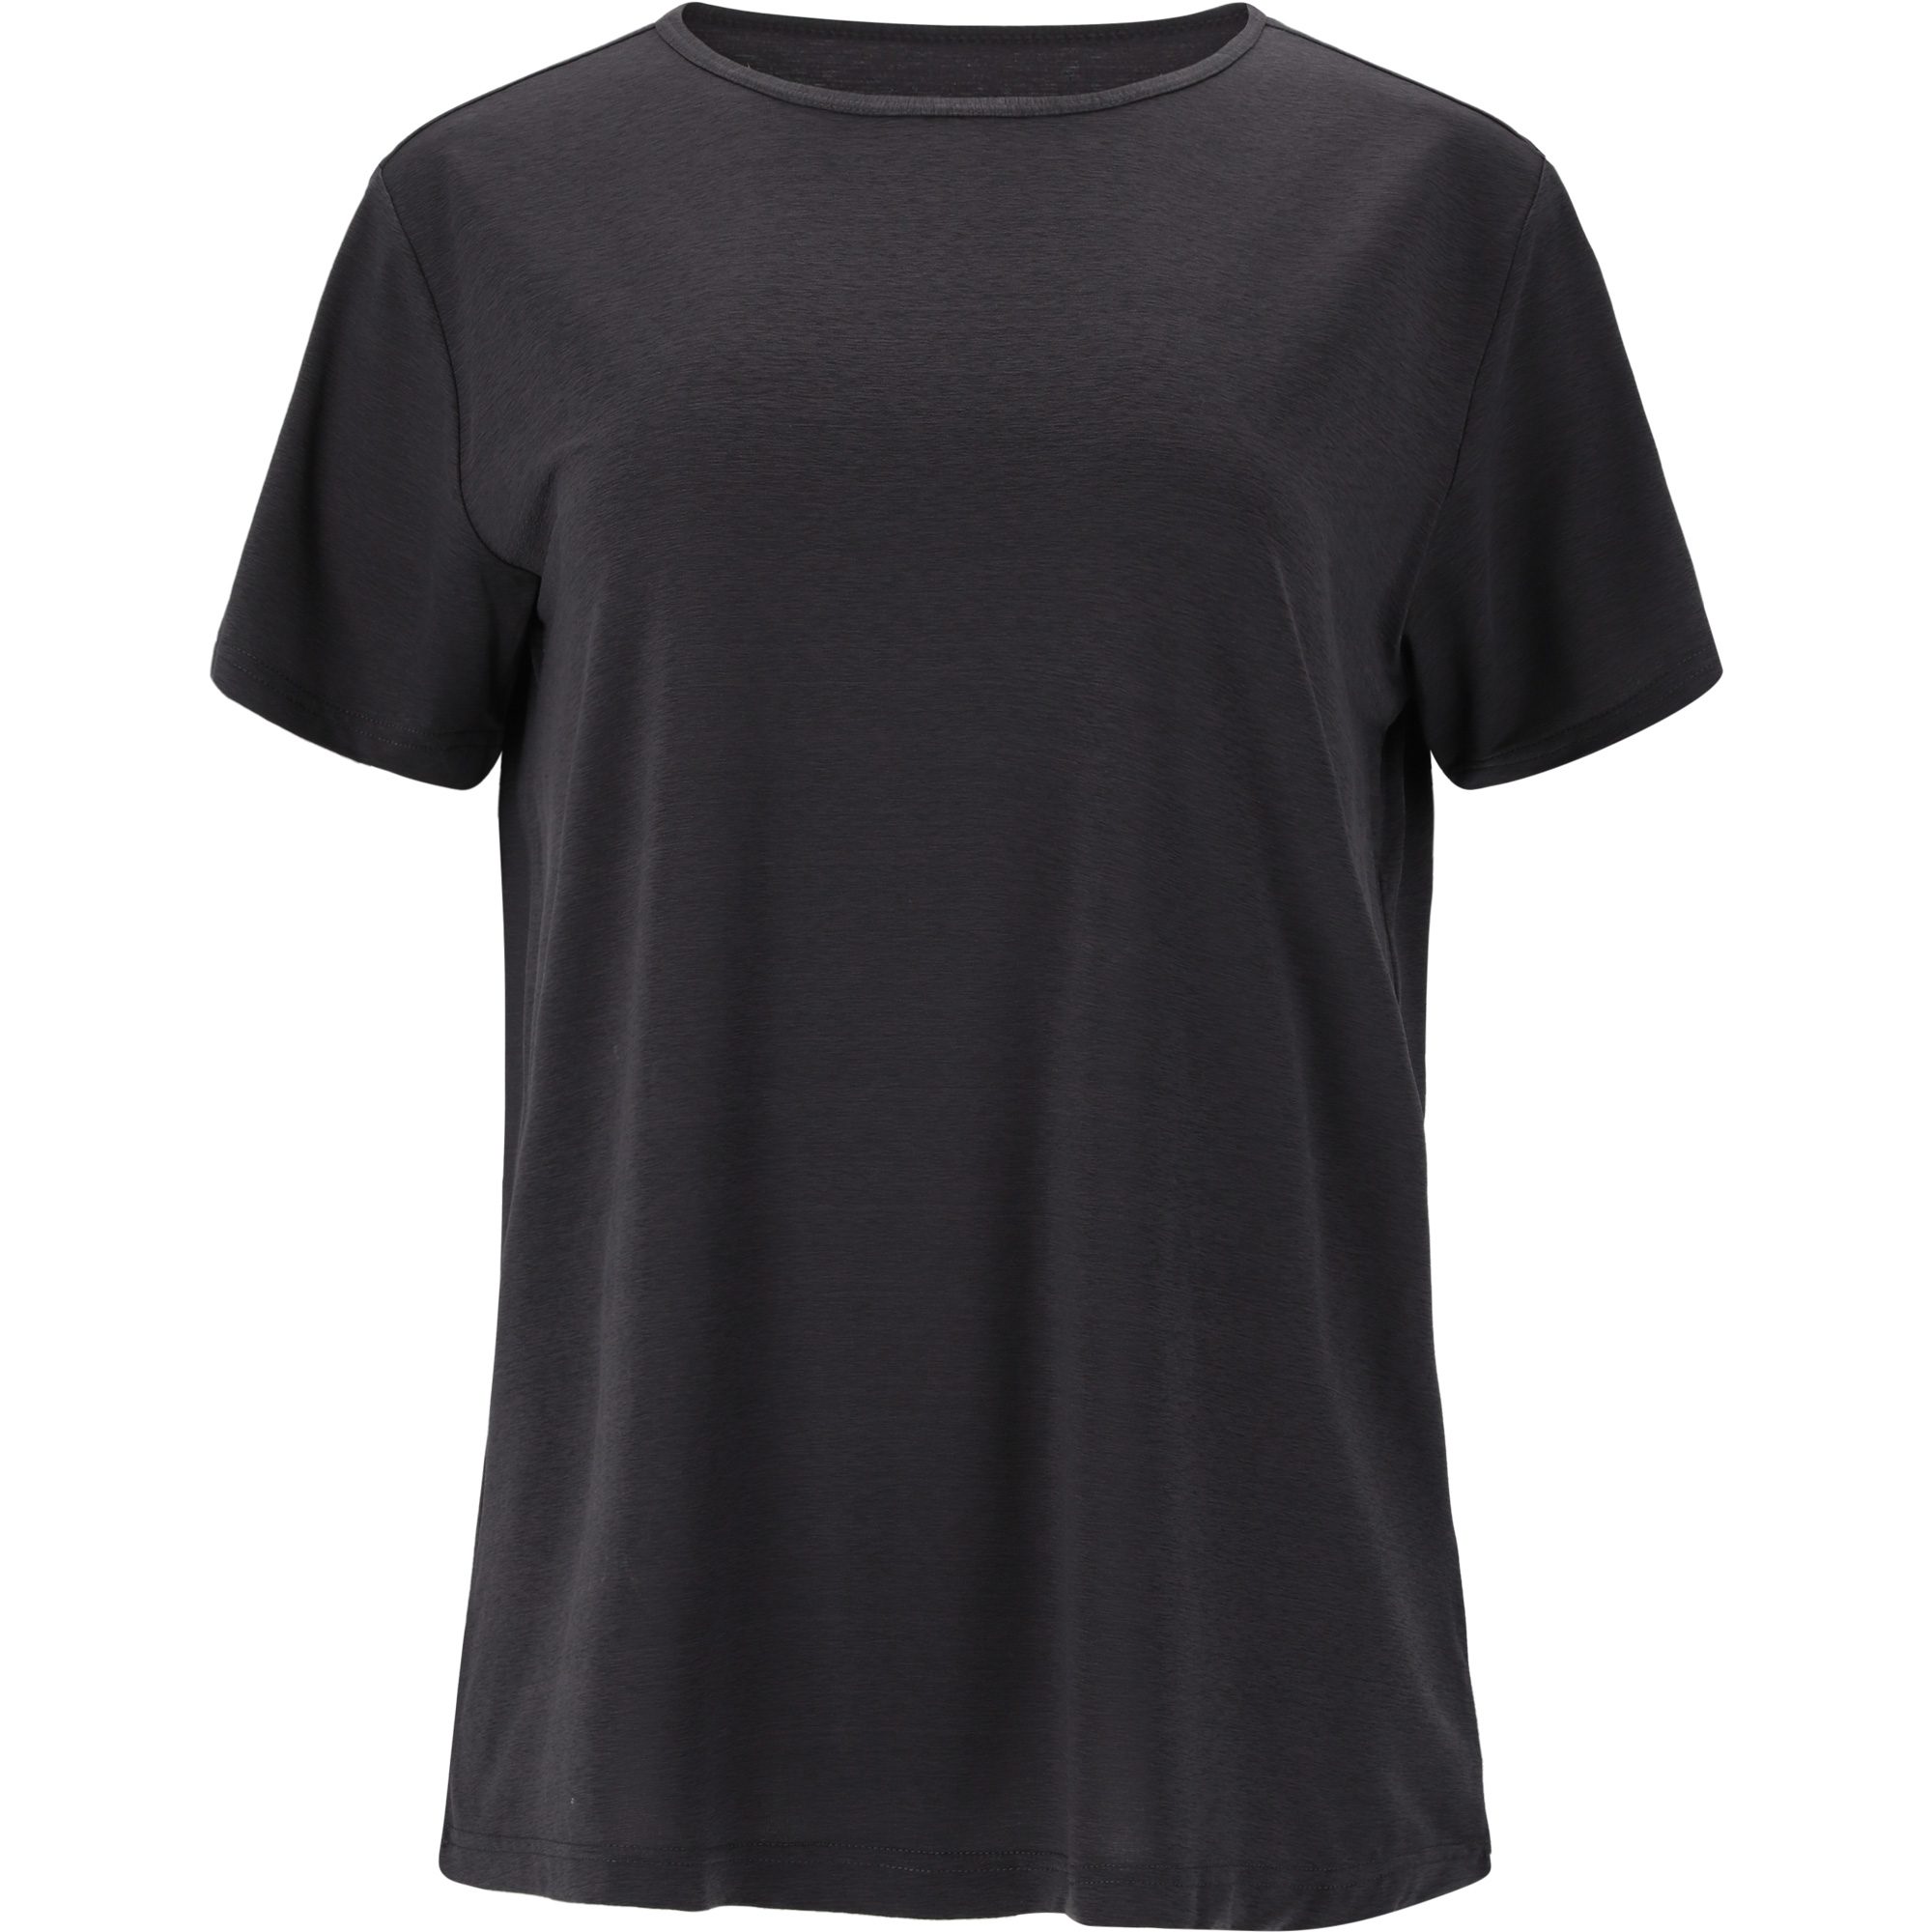 Athlecia - Lizzy W Slub T-Shirt Damen nine iron kaufen im Sport Bittl Shop